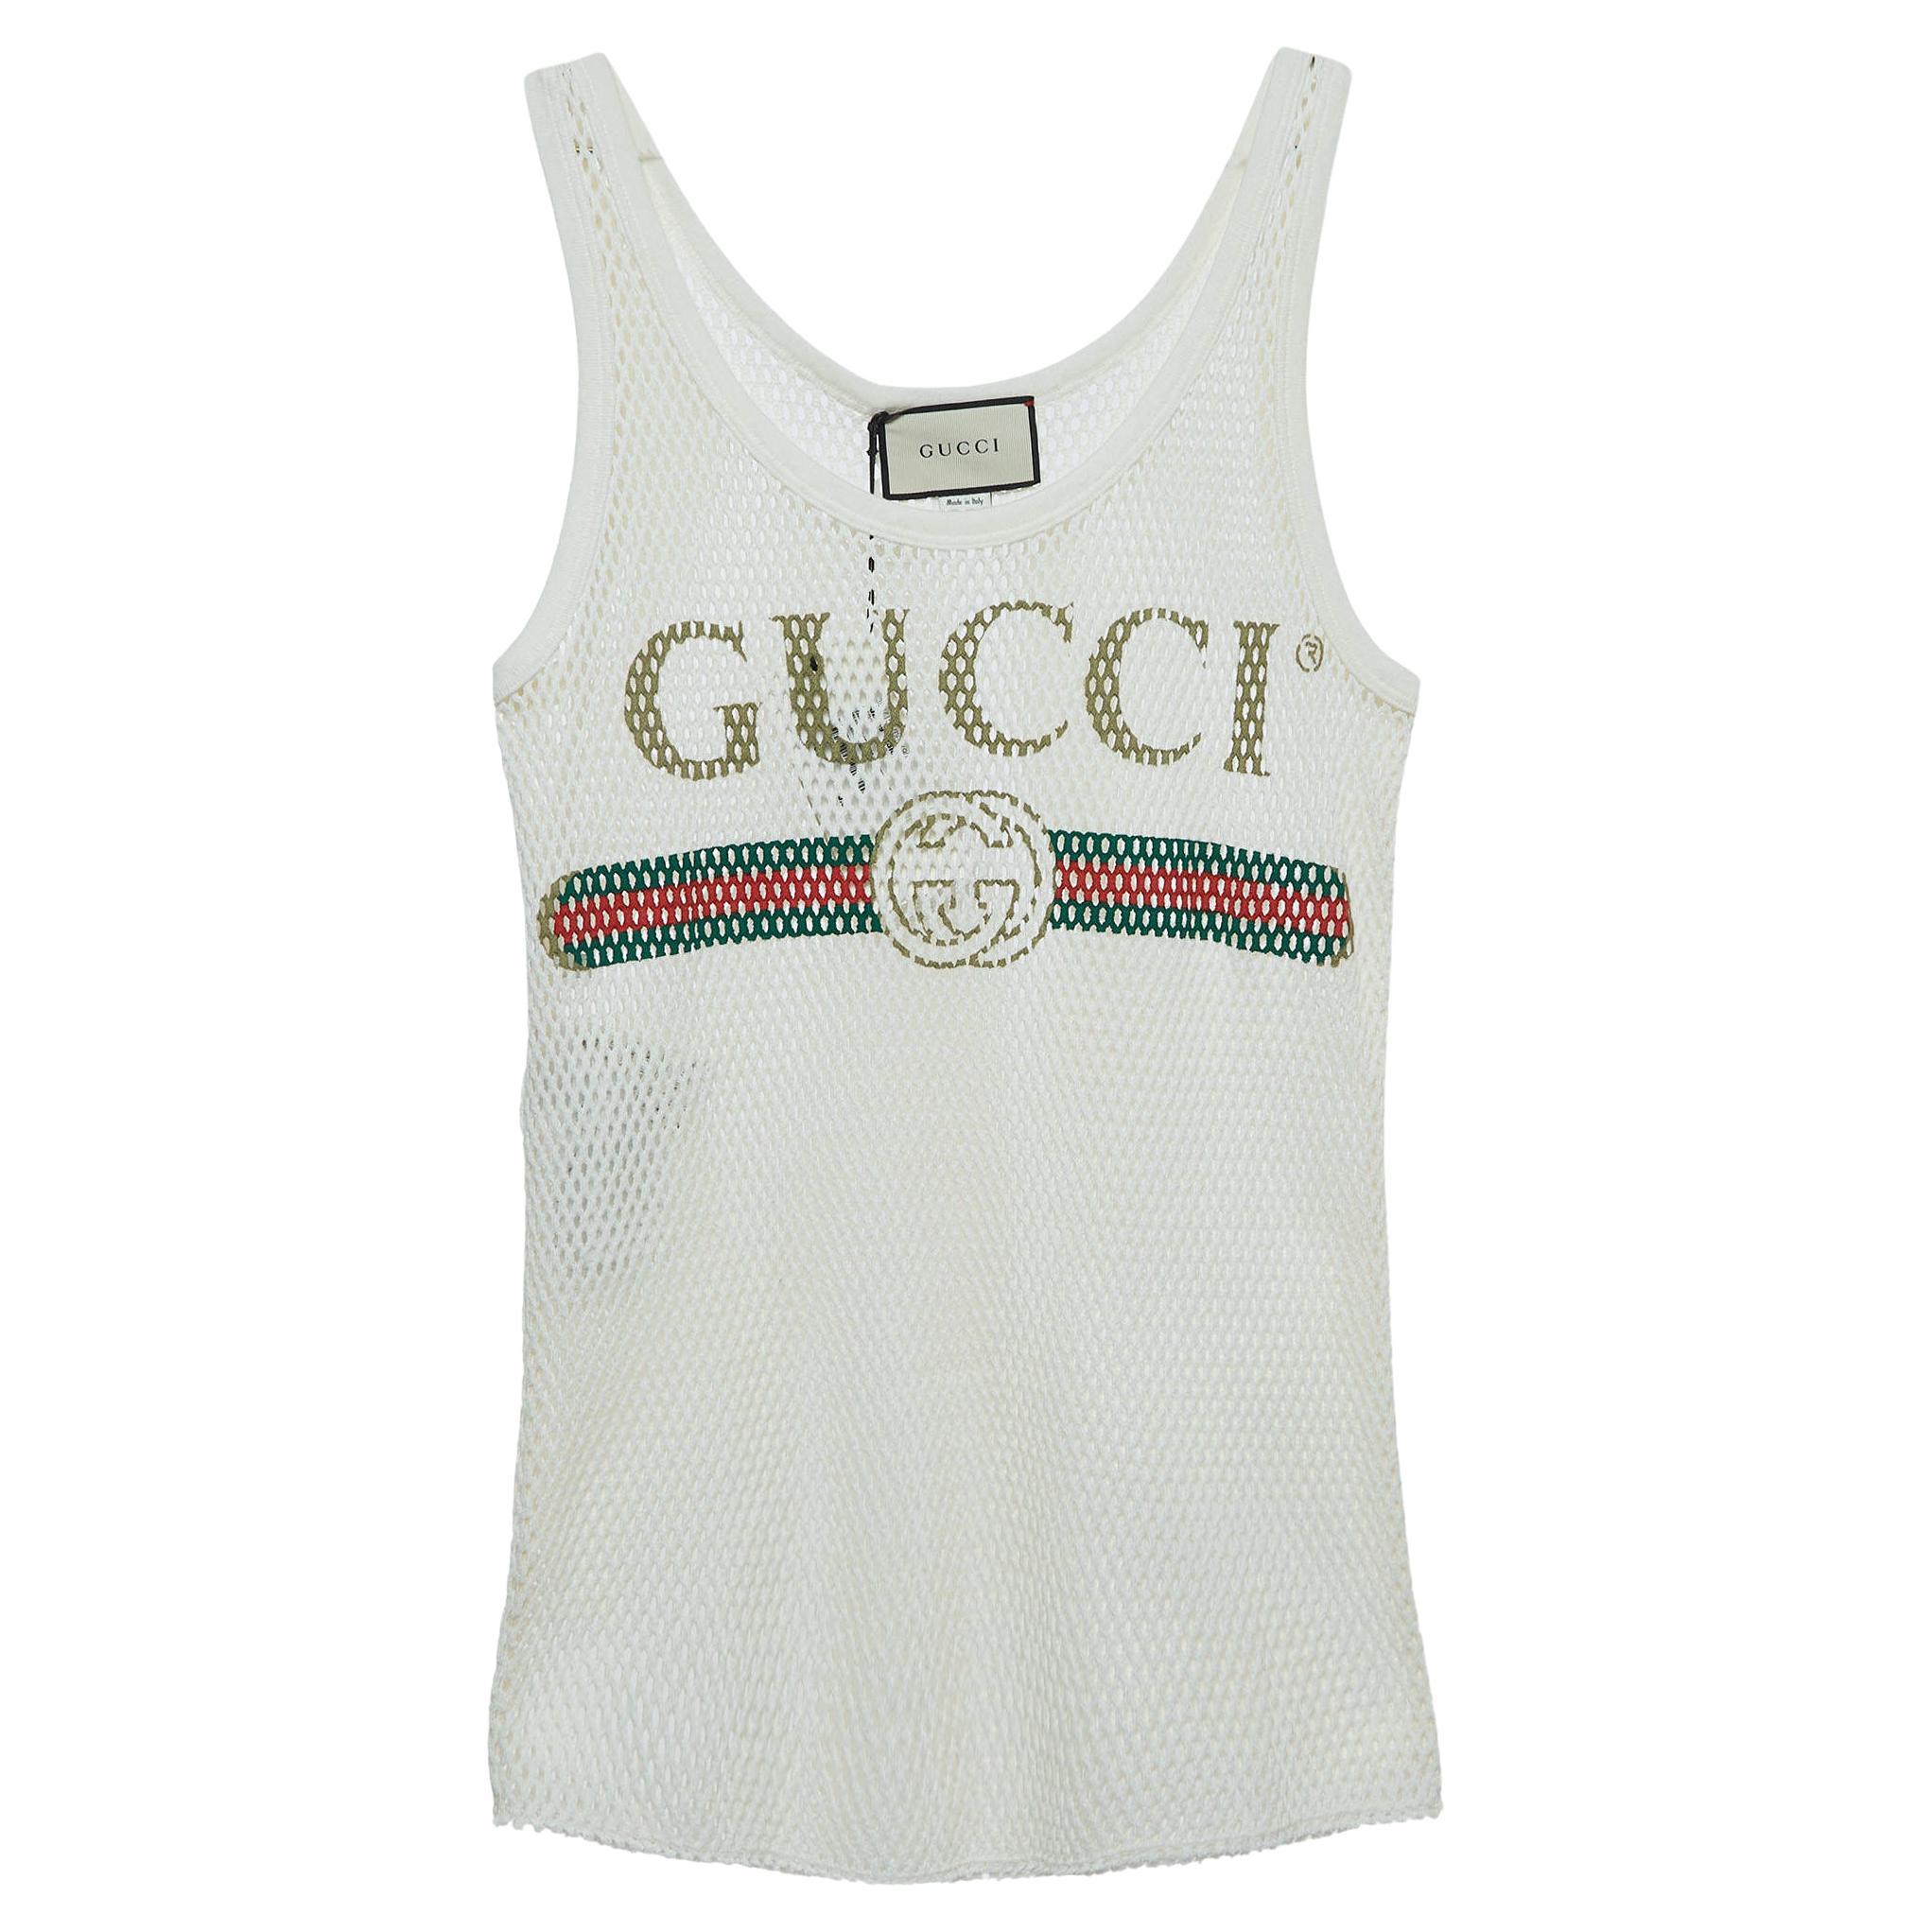 Gucci White Logo Printed Mesh Tank Top S